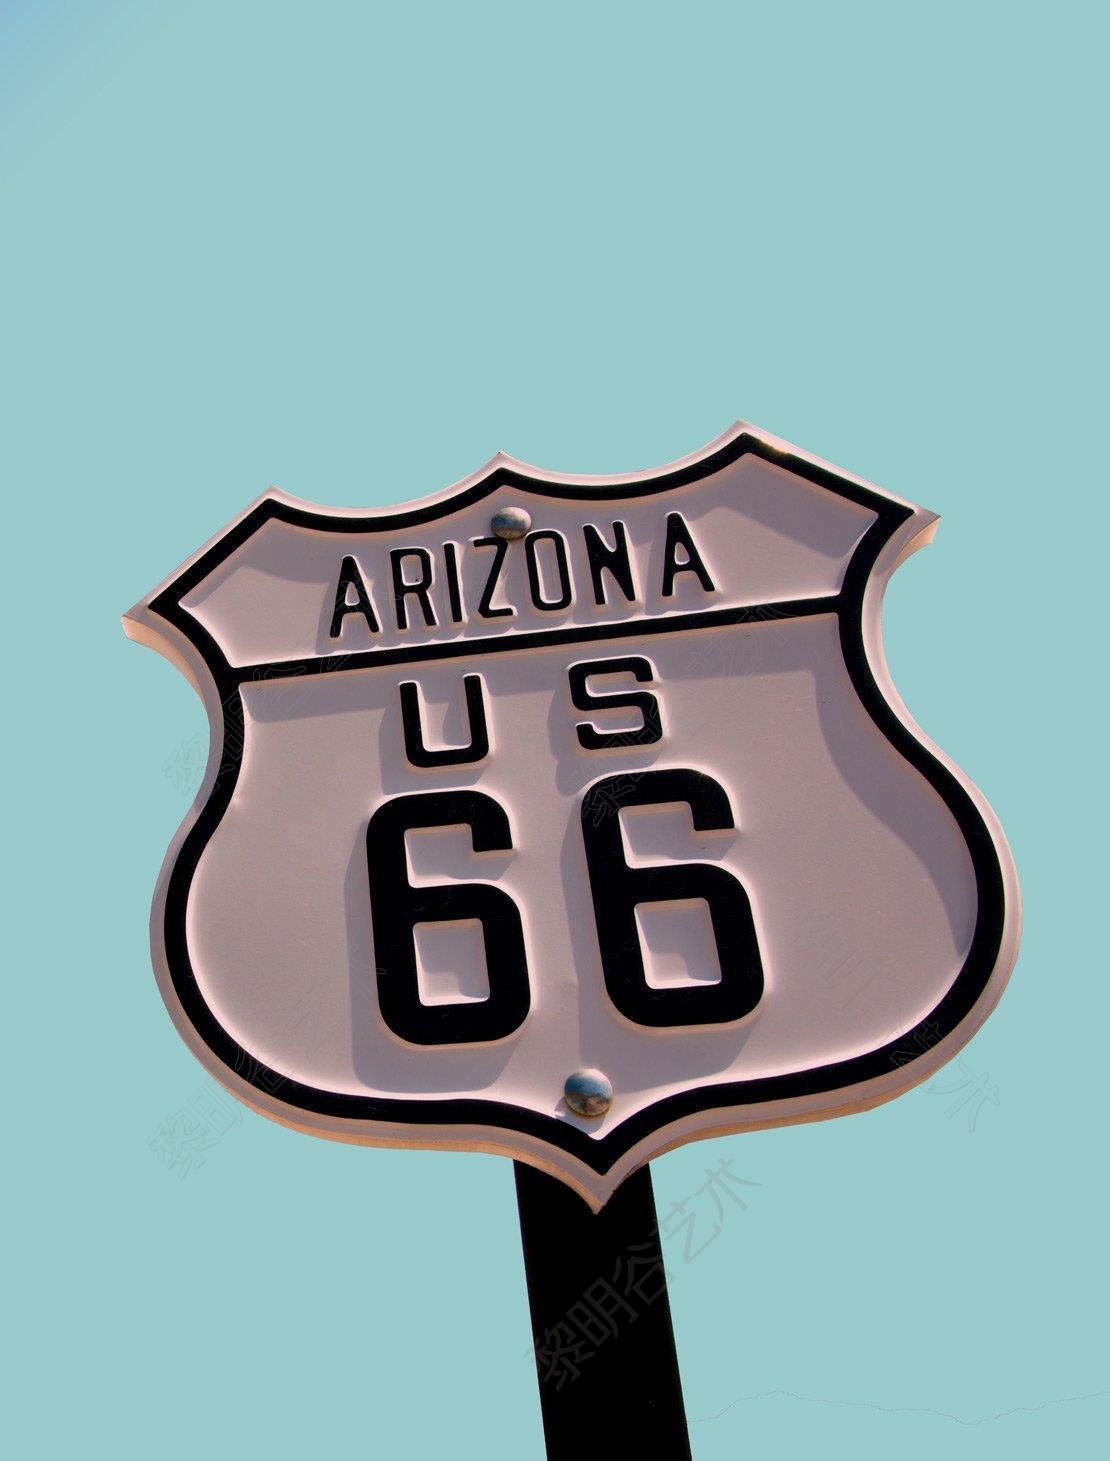 Arizona 66 - Route 66 Sign on Blue